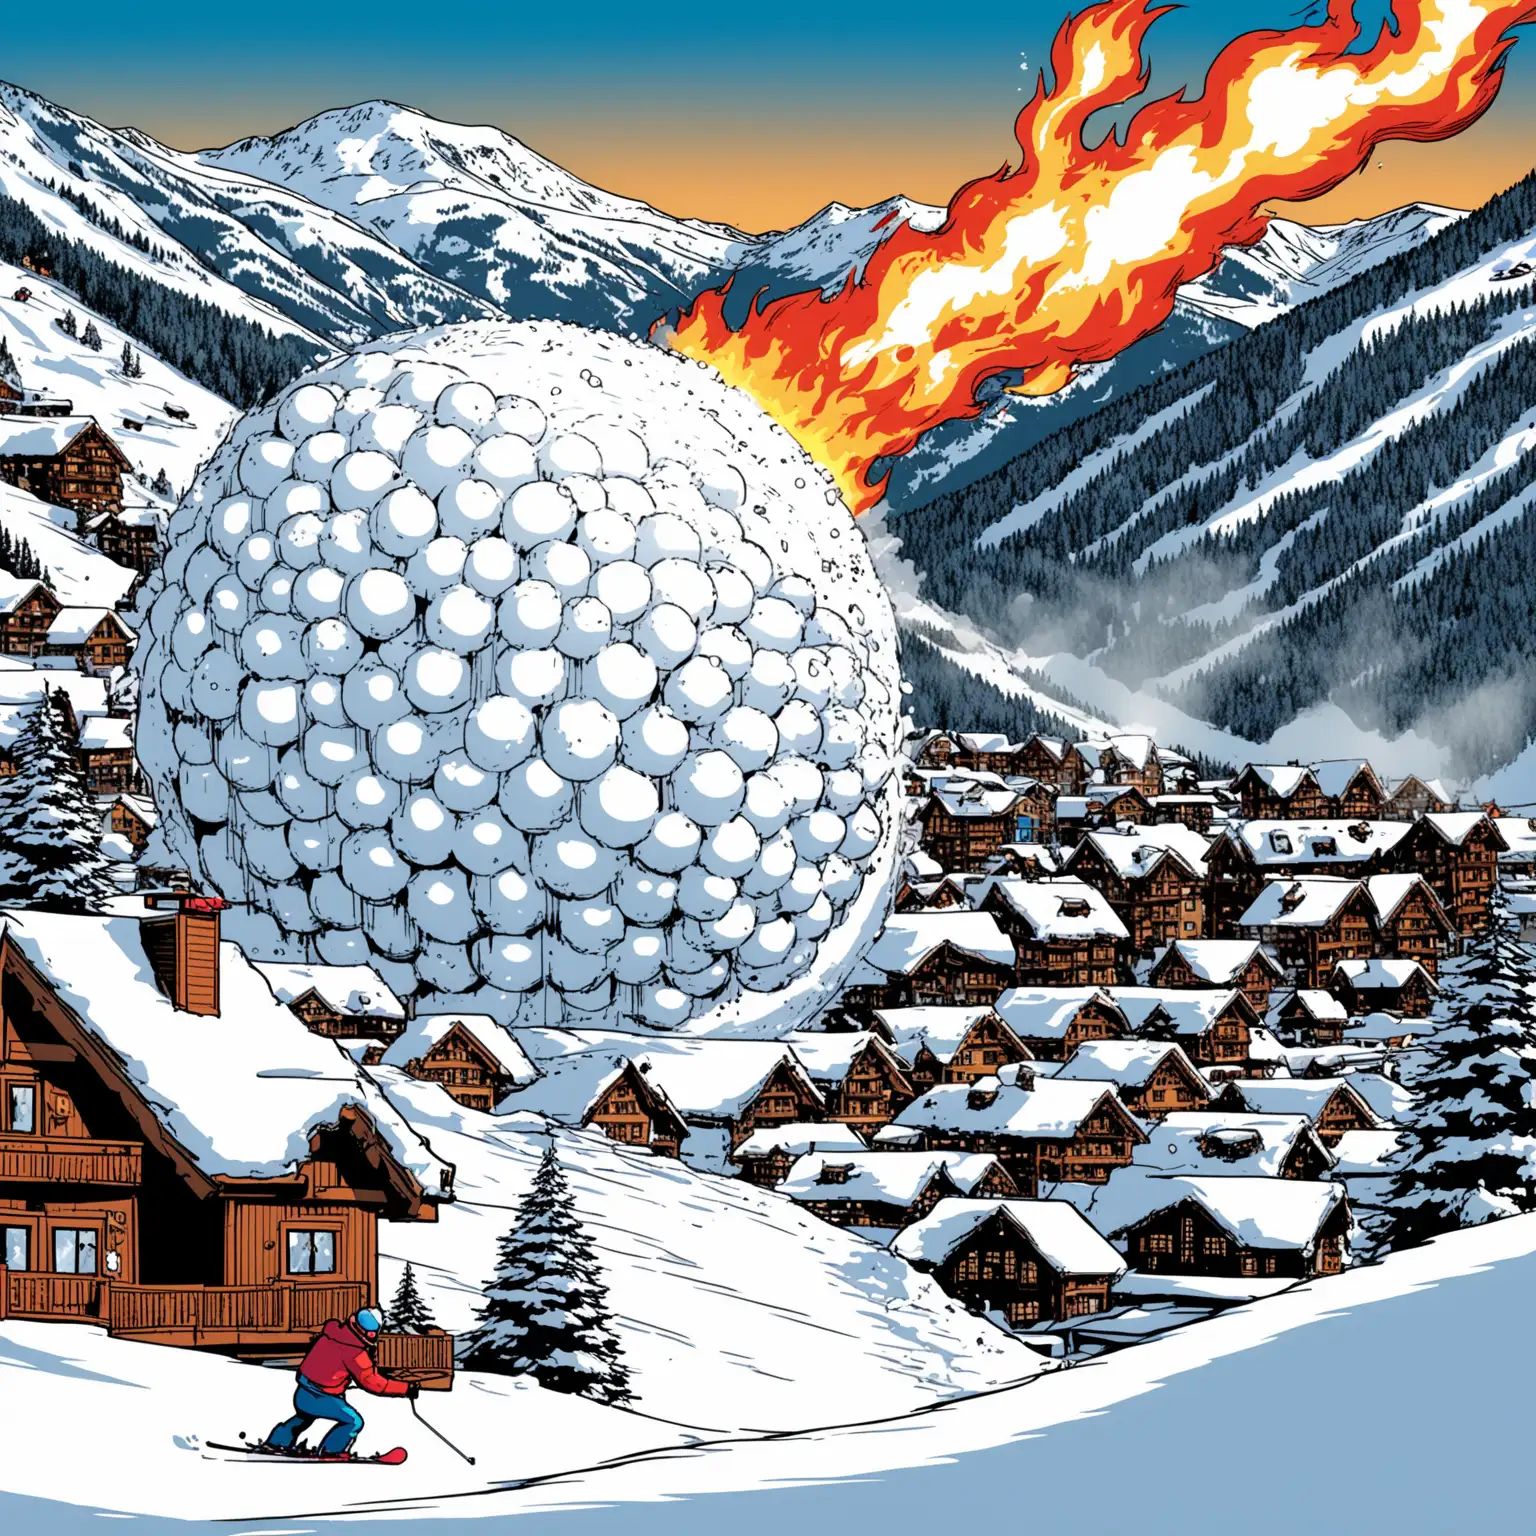 Epic Snowball Avalanche Threatens Ski Village Actionpacked Comic Book Illustration